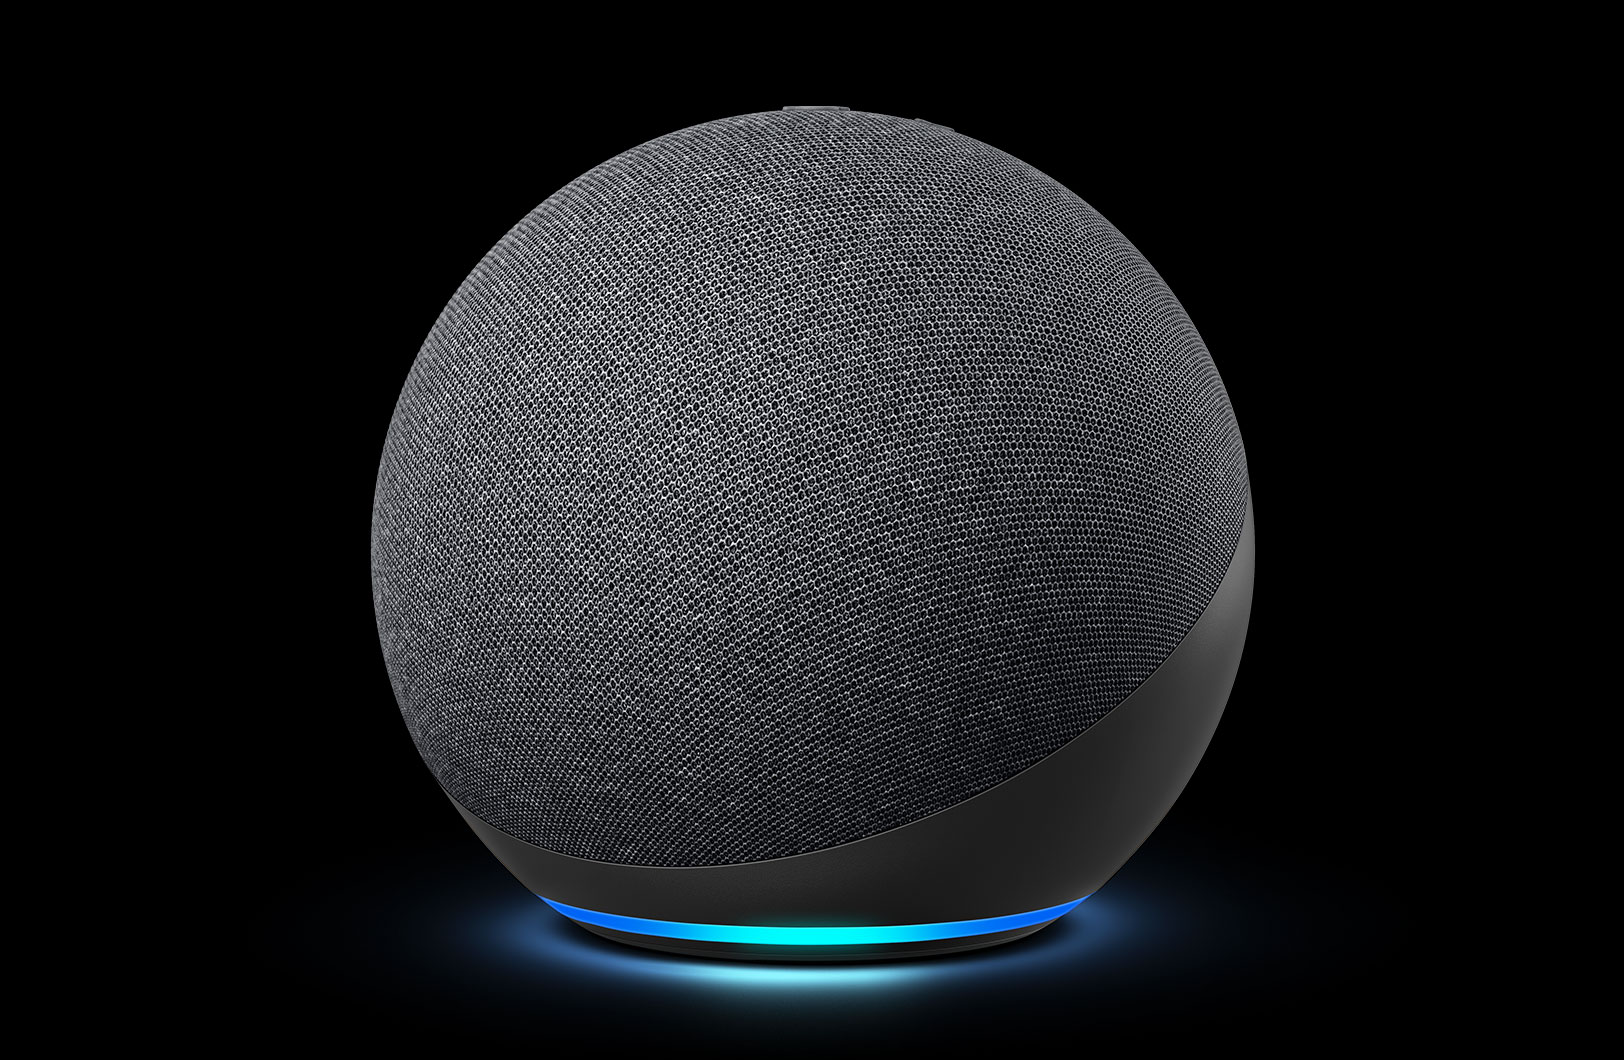 The newest in Amazon's Echo smart speaker line.